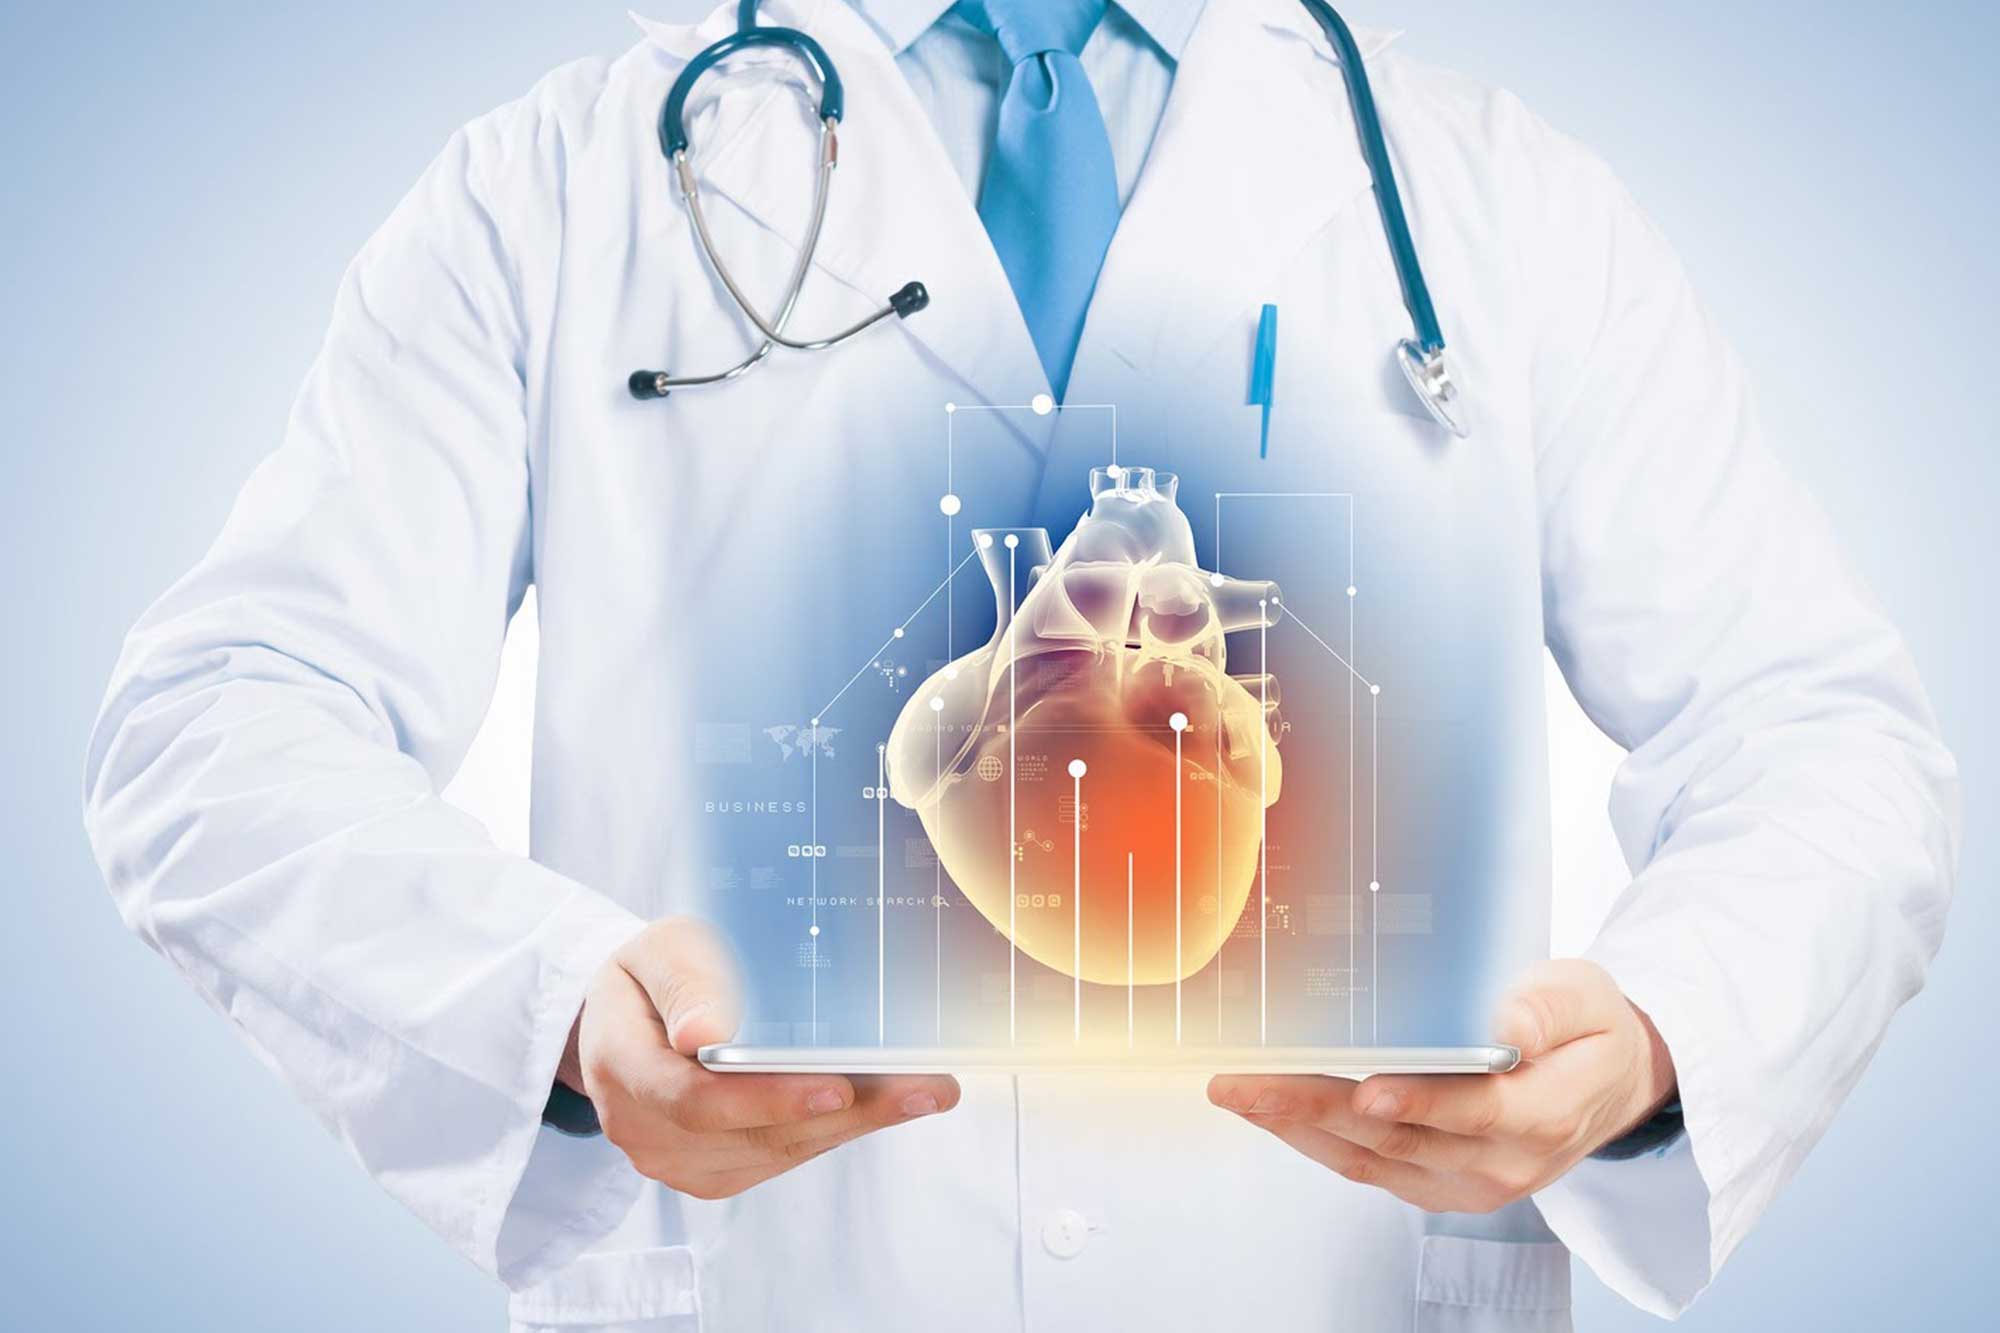 Cardiology tretment at regency Health